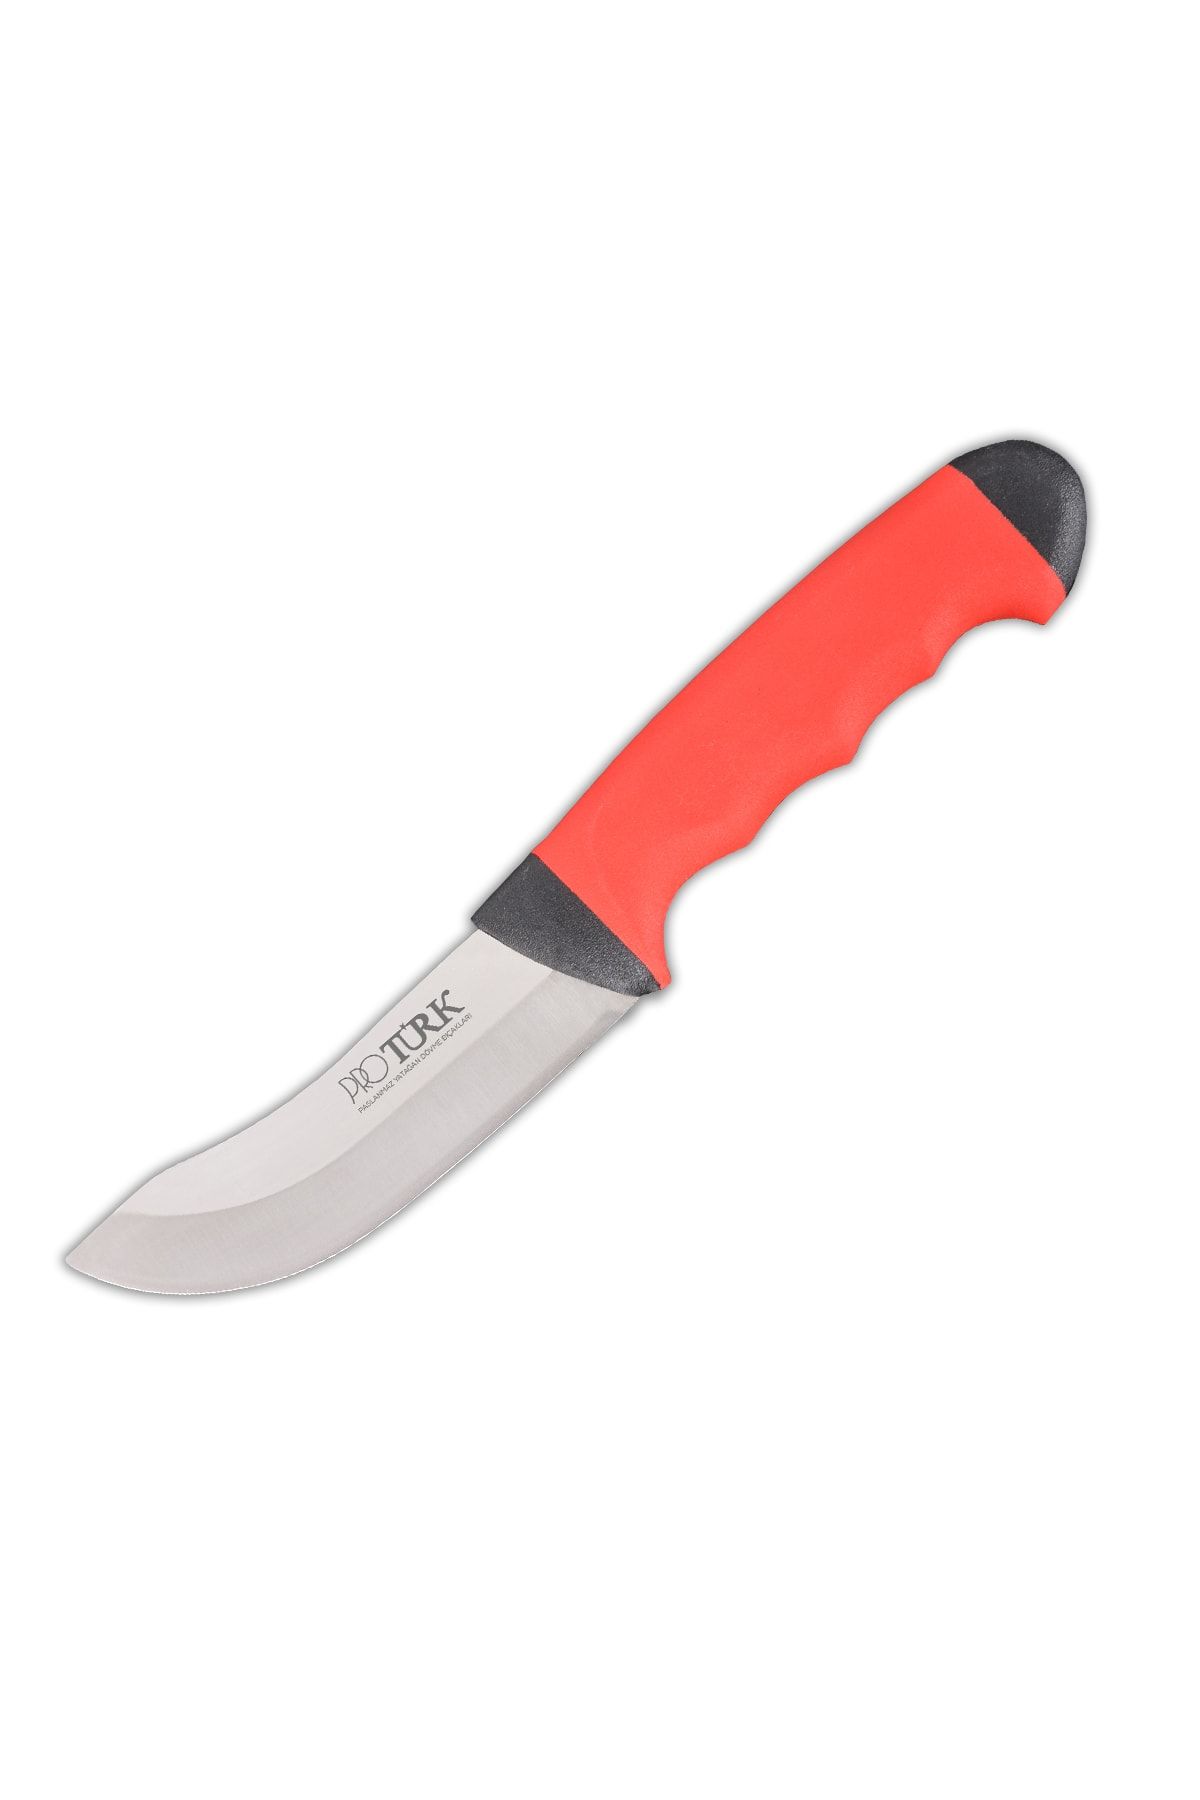 protürk Yüzme Bıçağı